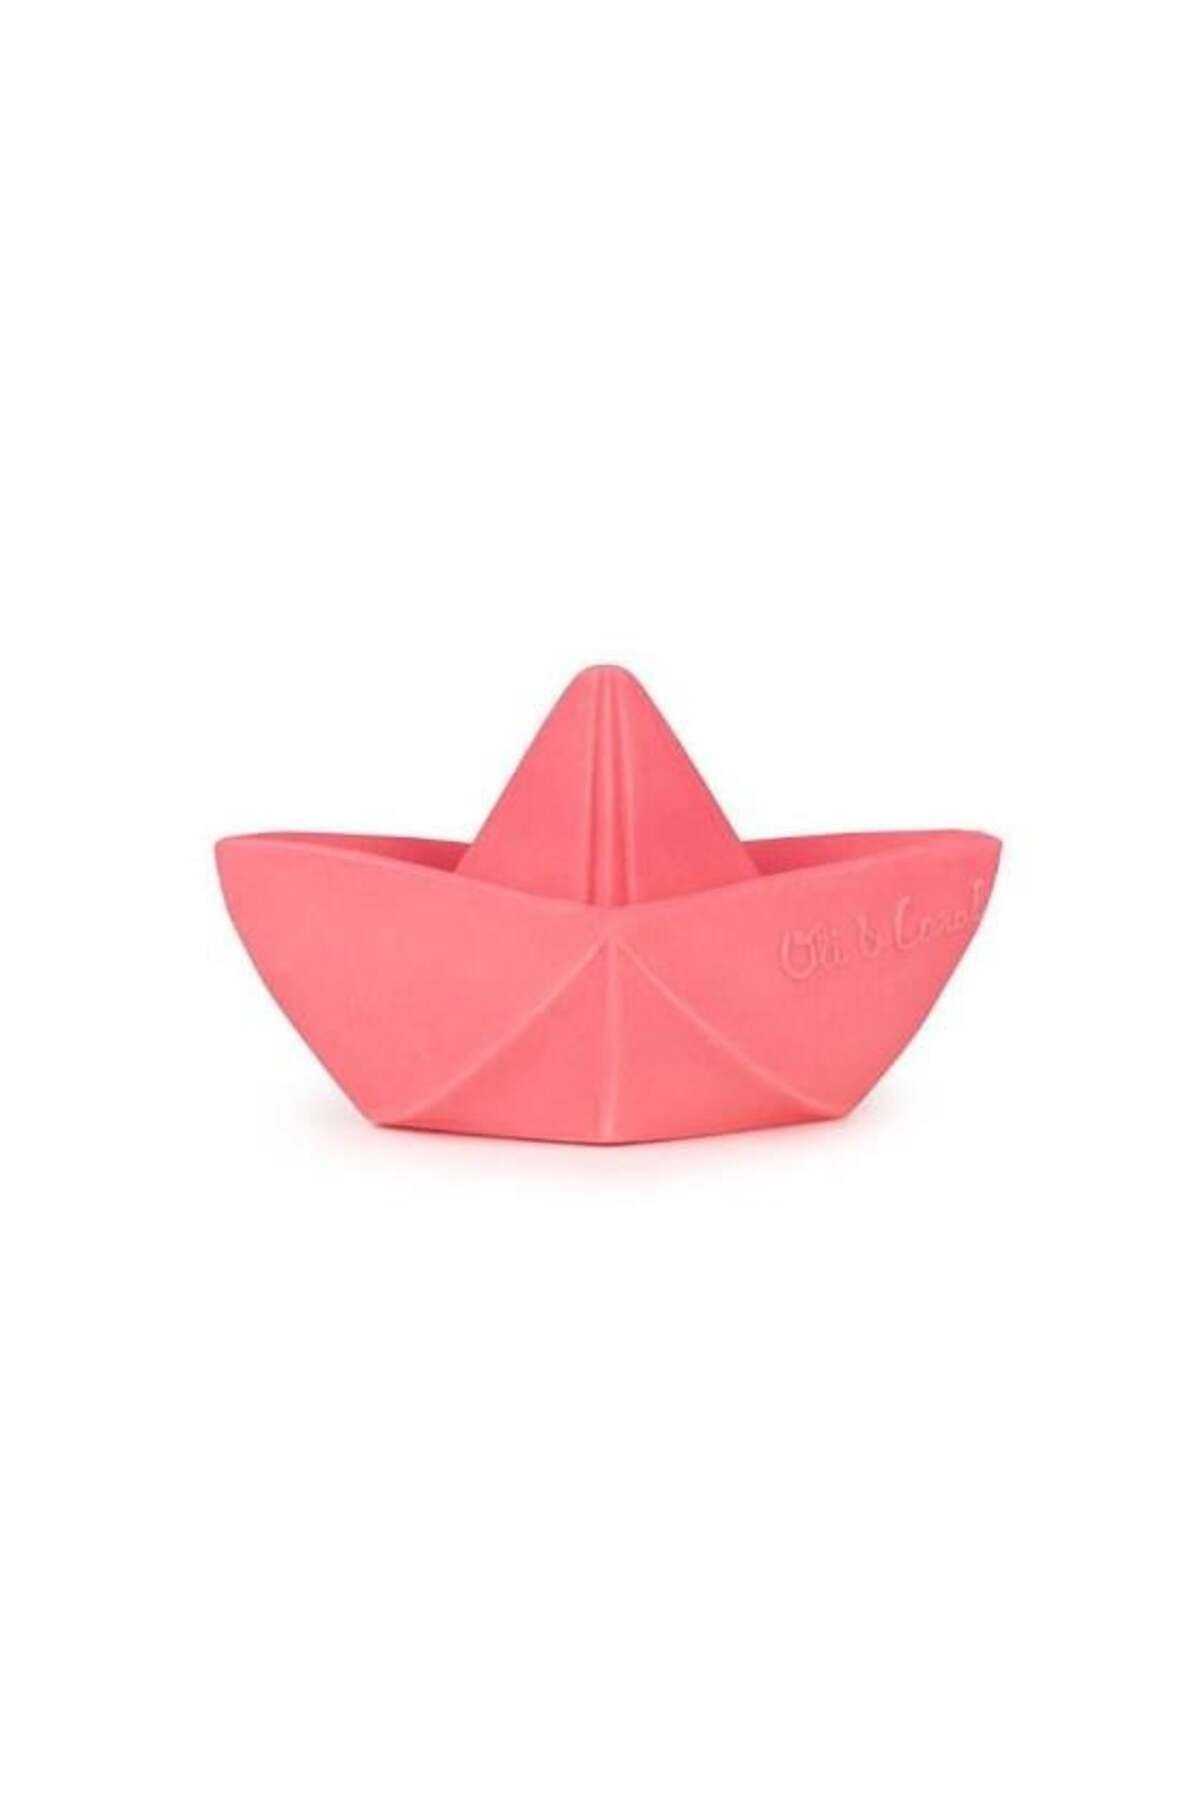 OLI CAROL Origami Tekne Pembe Banyo Oyuncağı